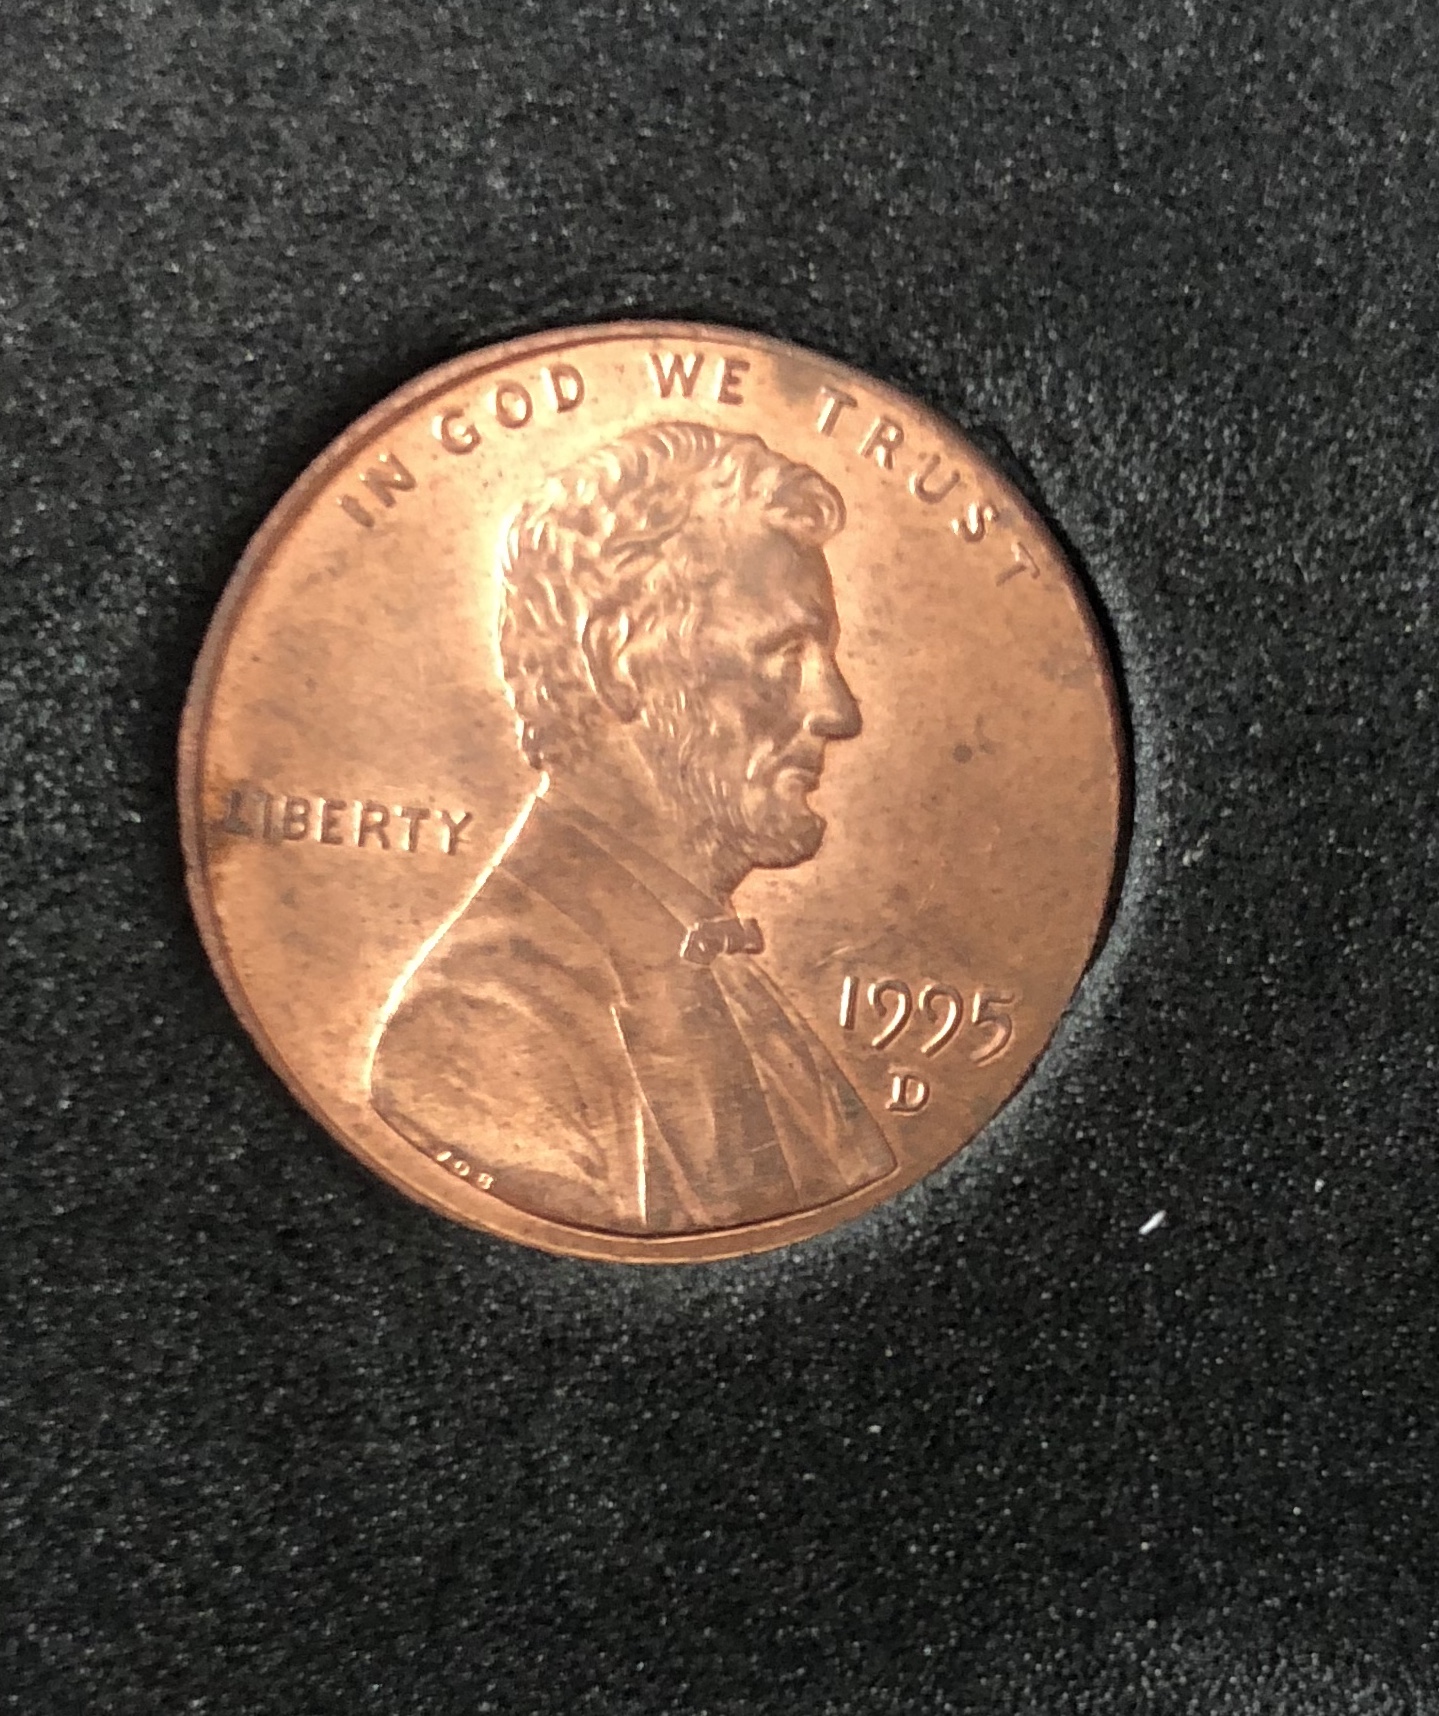 1995 double die penny